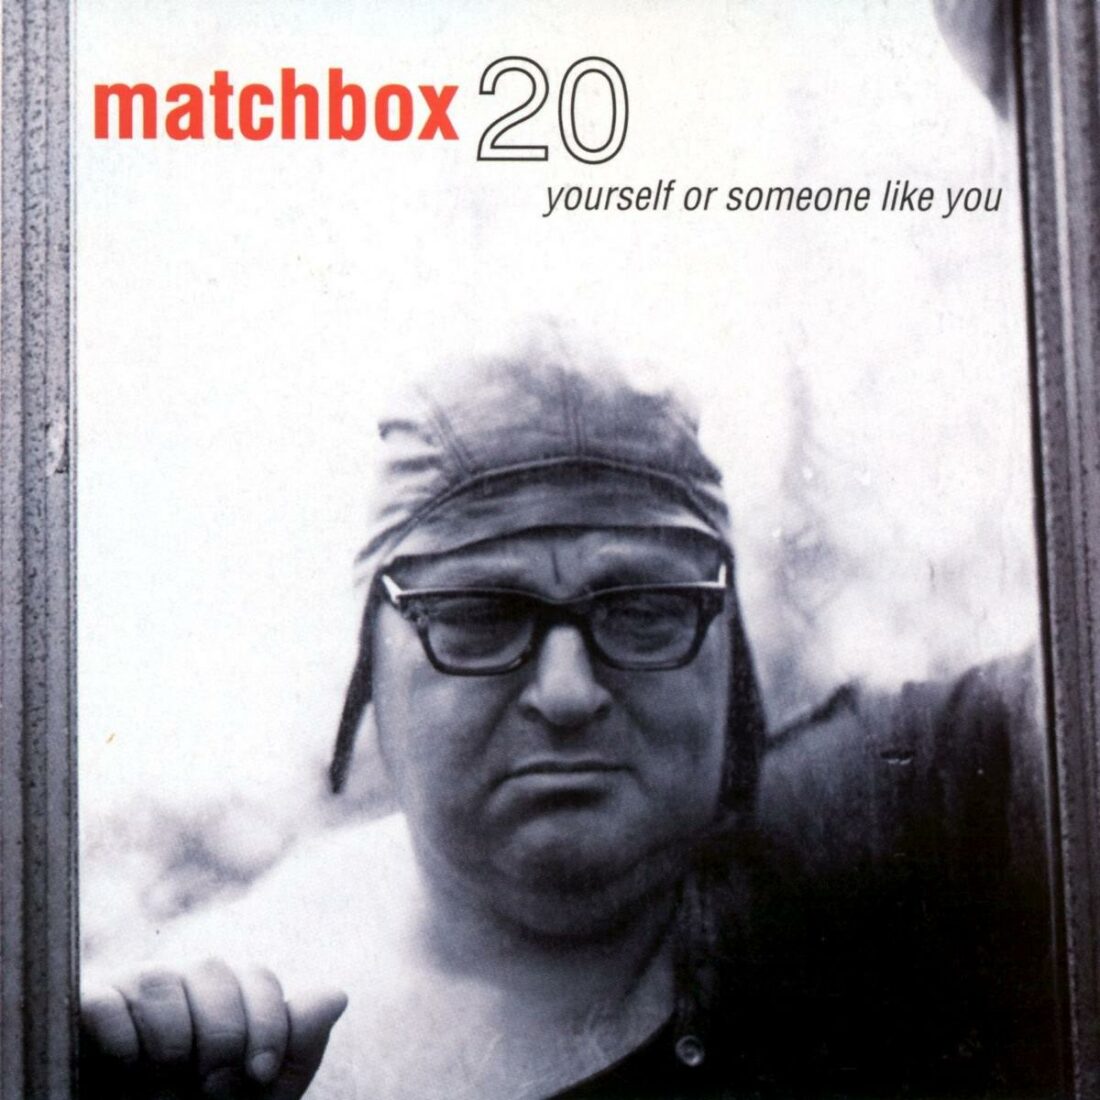 Matchbox Twenty, Yourself or Someone Like You. (From: Amazon)